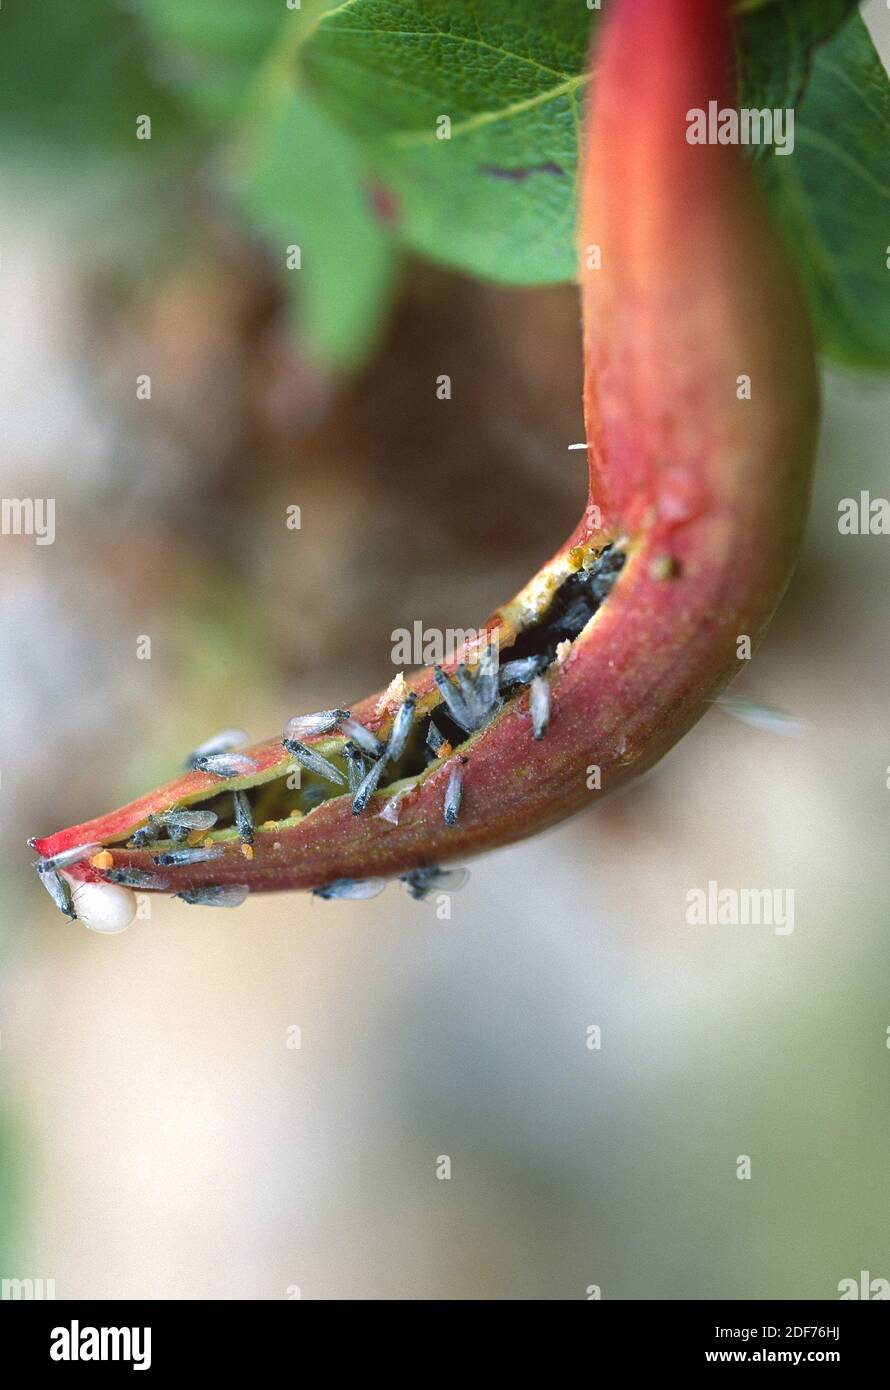 Terebinth gall produced by Baizongia pistaciae or Pemphigus cornicularius on terebinth (Pistacia terebinthus). Stock Photo